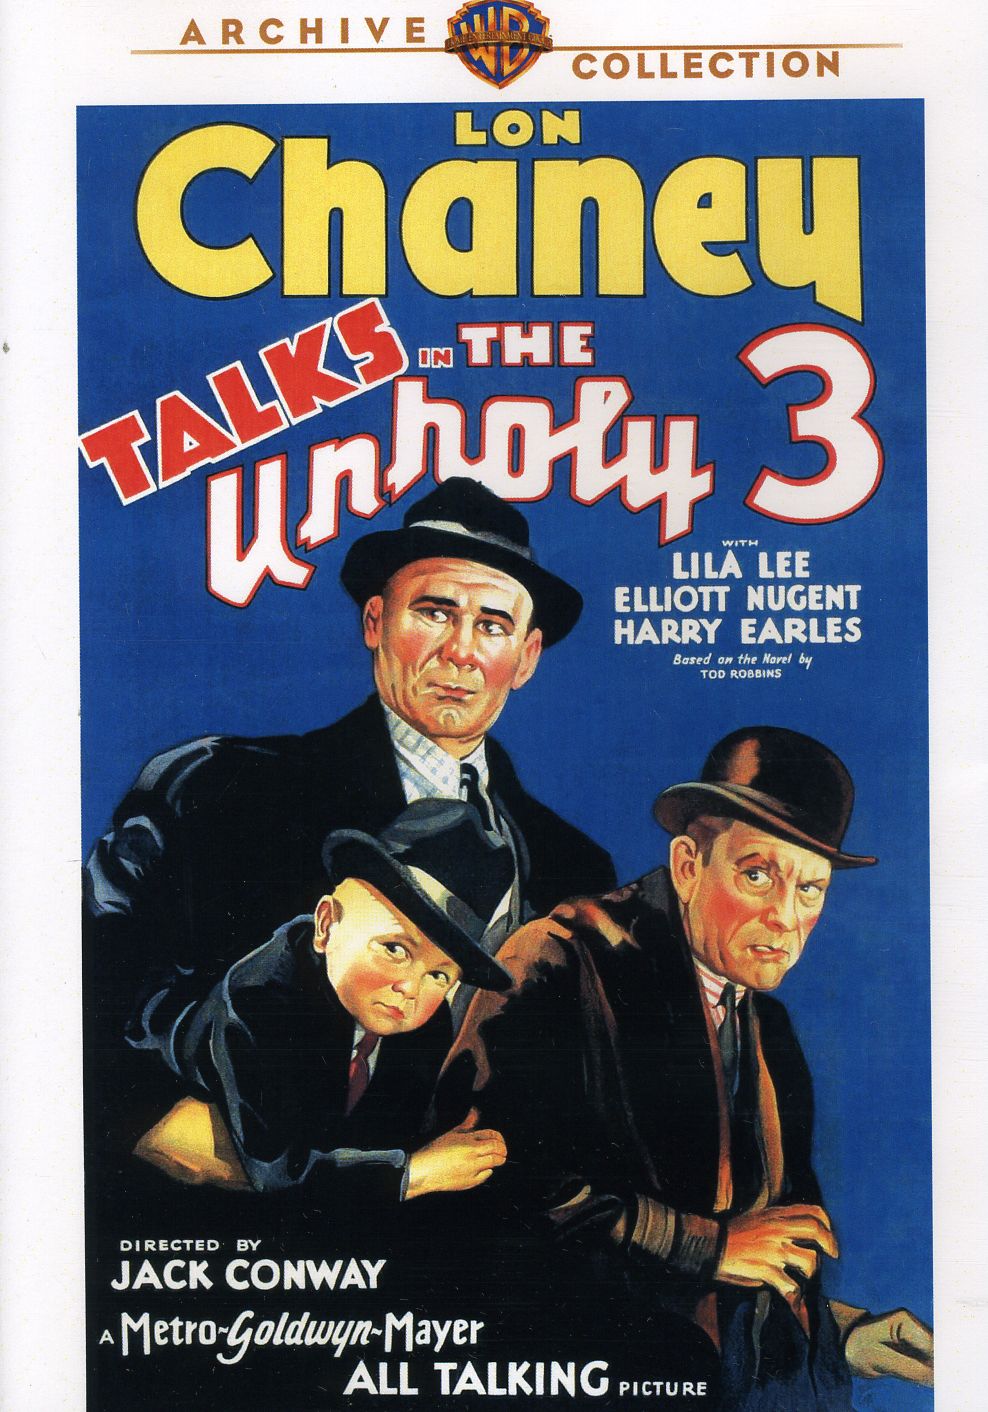 UNHOLY 3 (1930) / (FULL MOD RMST MONO)